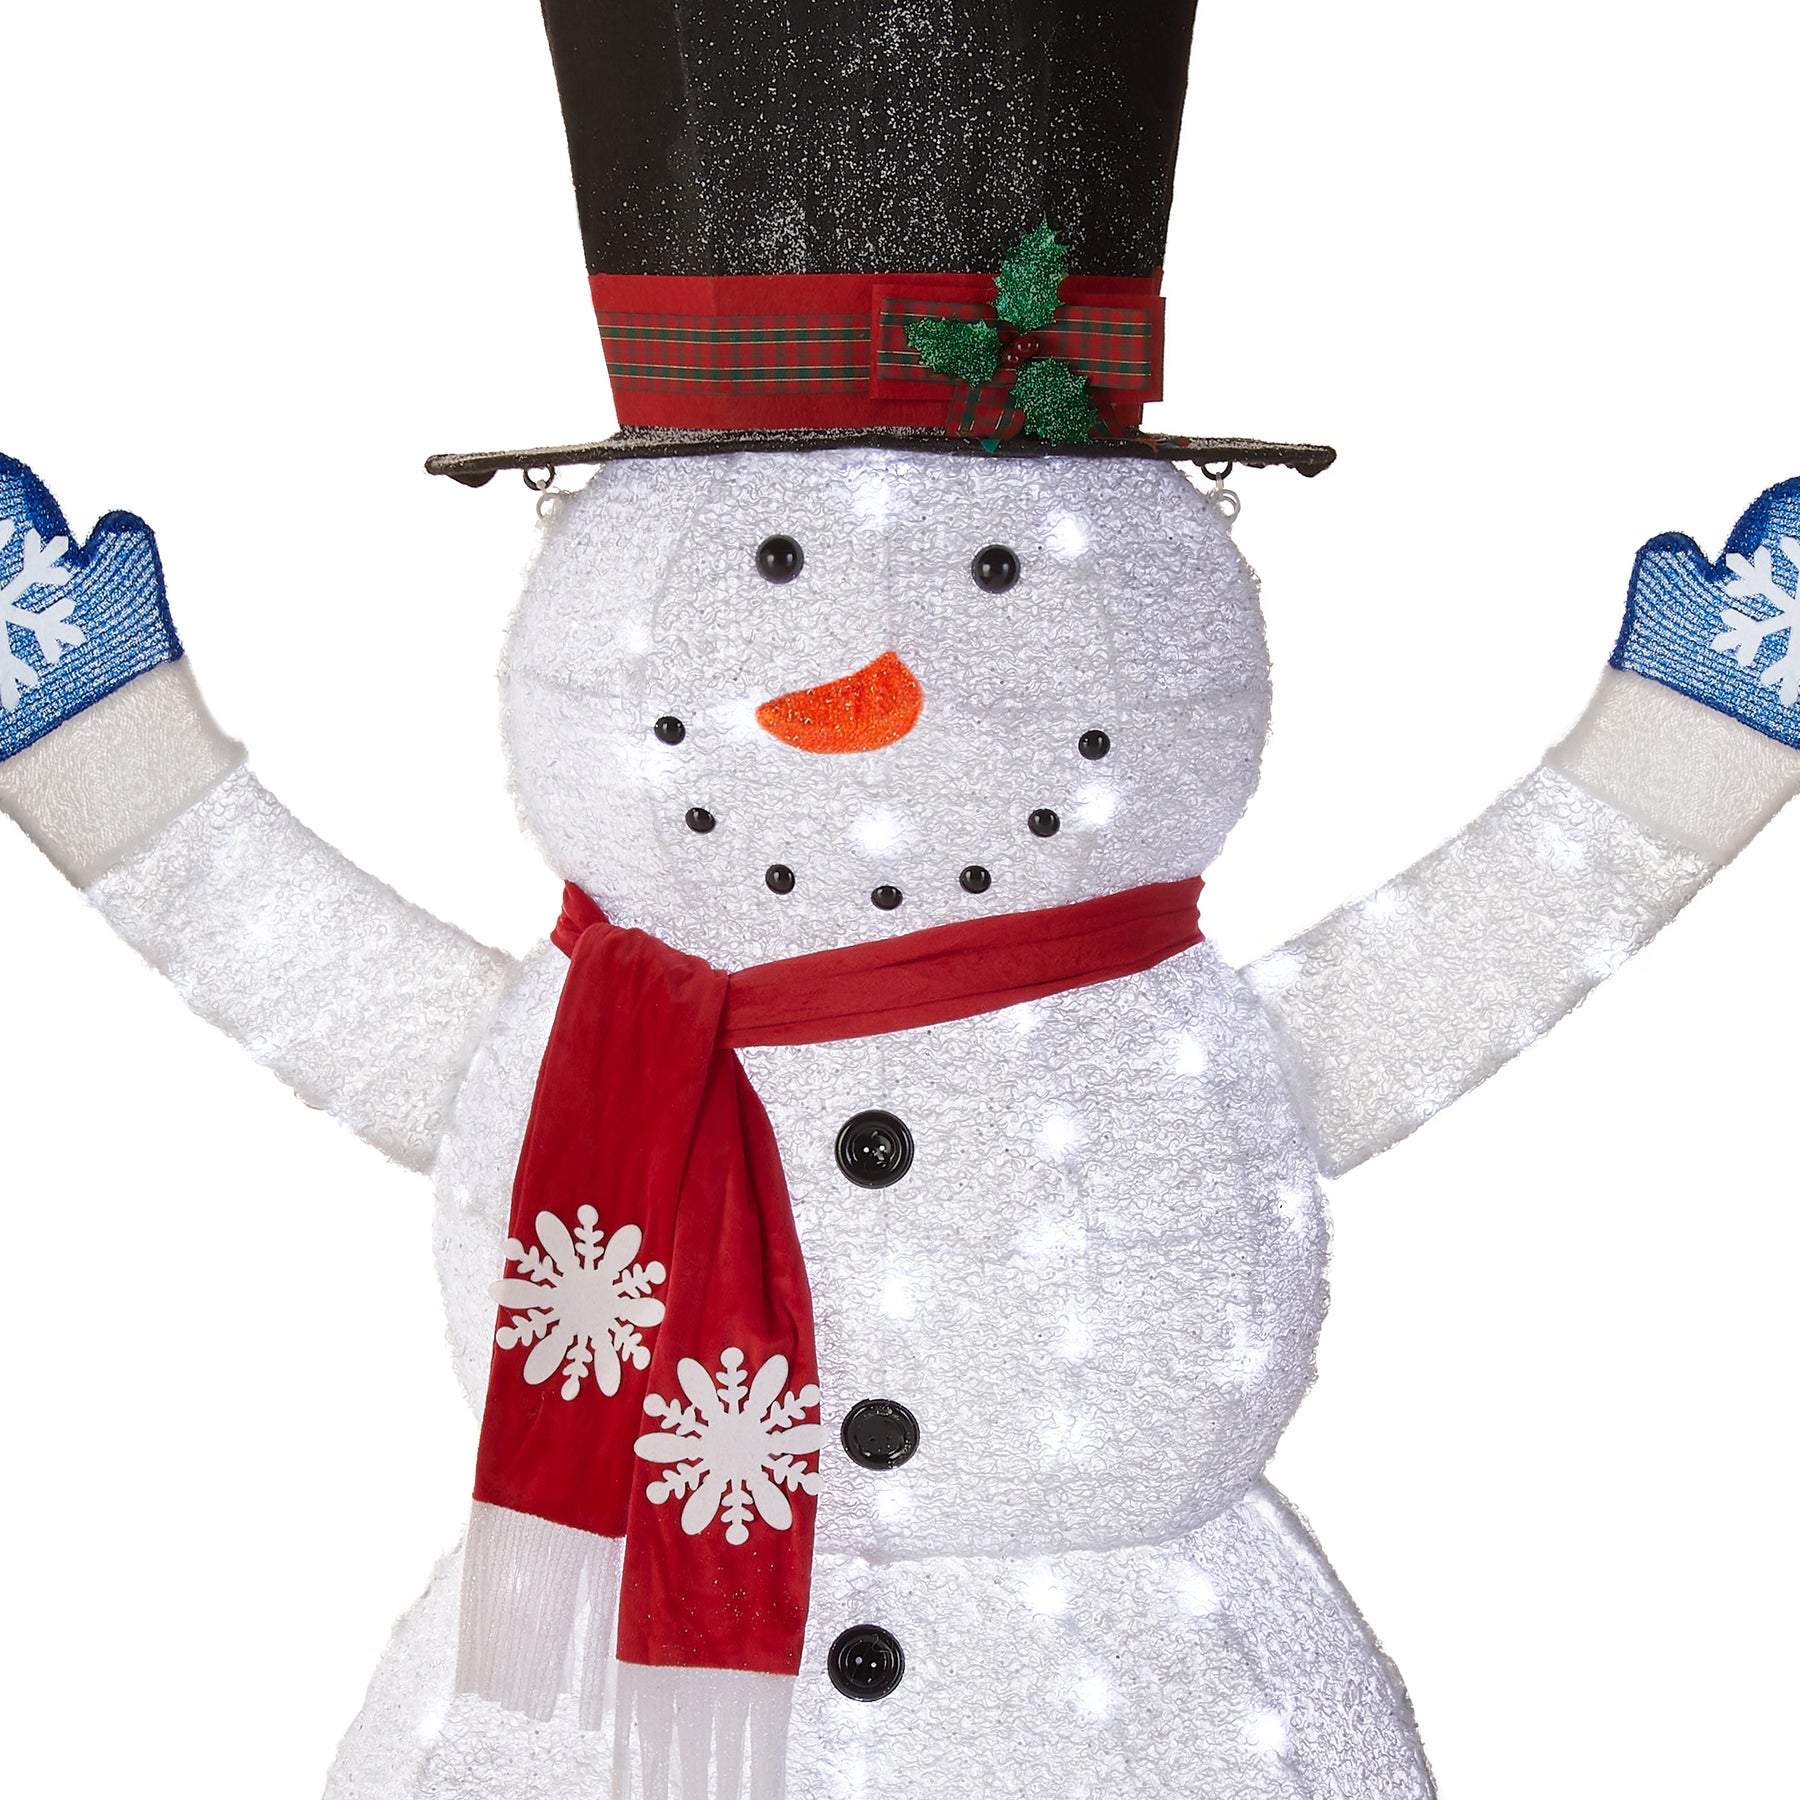 Snowman Kit Tree Dress Up - National Tree Company, 1 Each - King